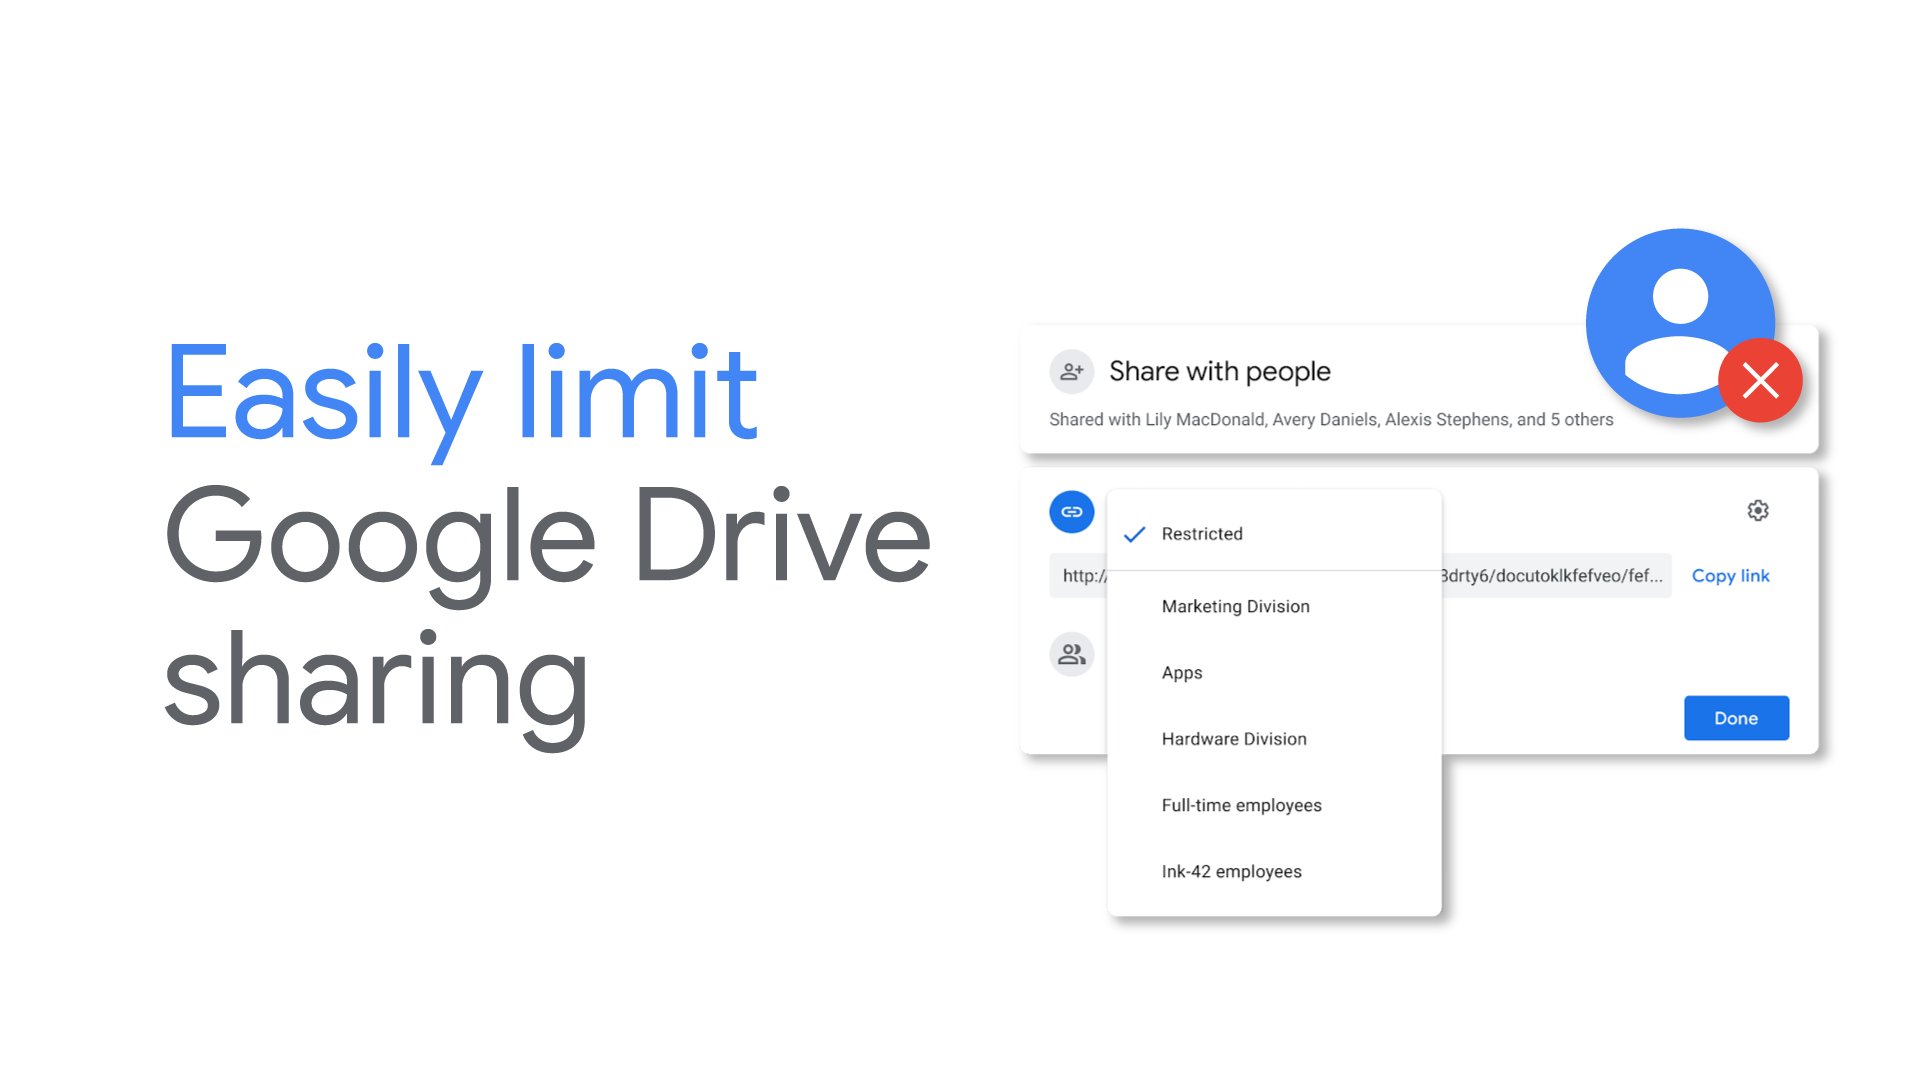 Google Drive on Twitter: "Need limit a shared #GoogleDrive? Learn how → https://t.co/CX2k2E4ssQ https://t.co/fQ0jLVqwfZ" / Twitter